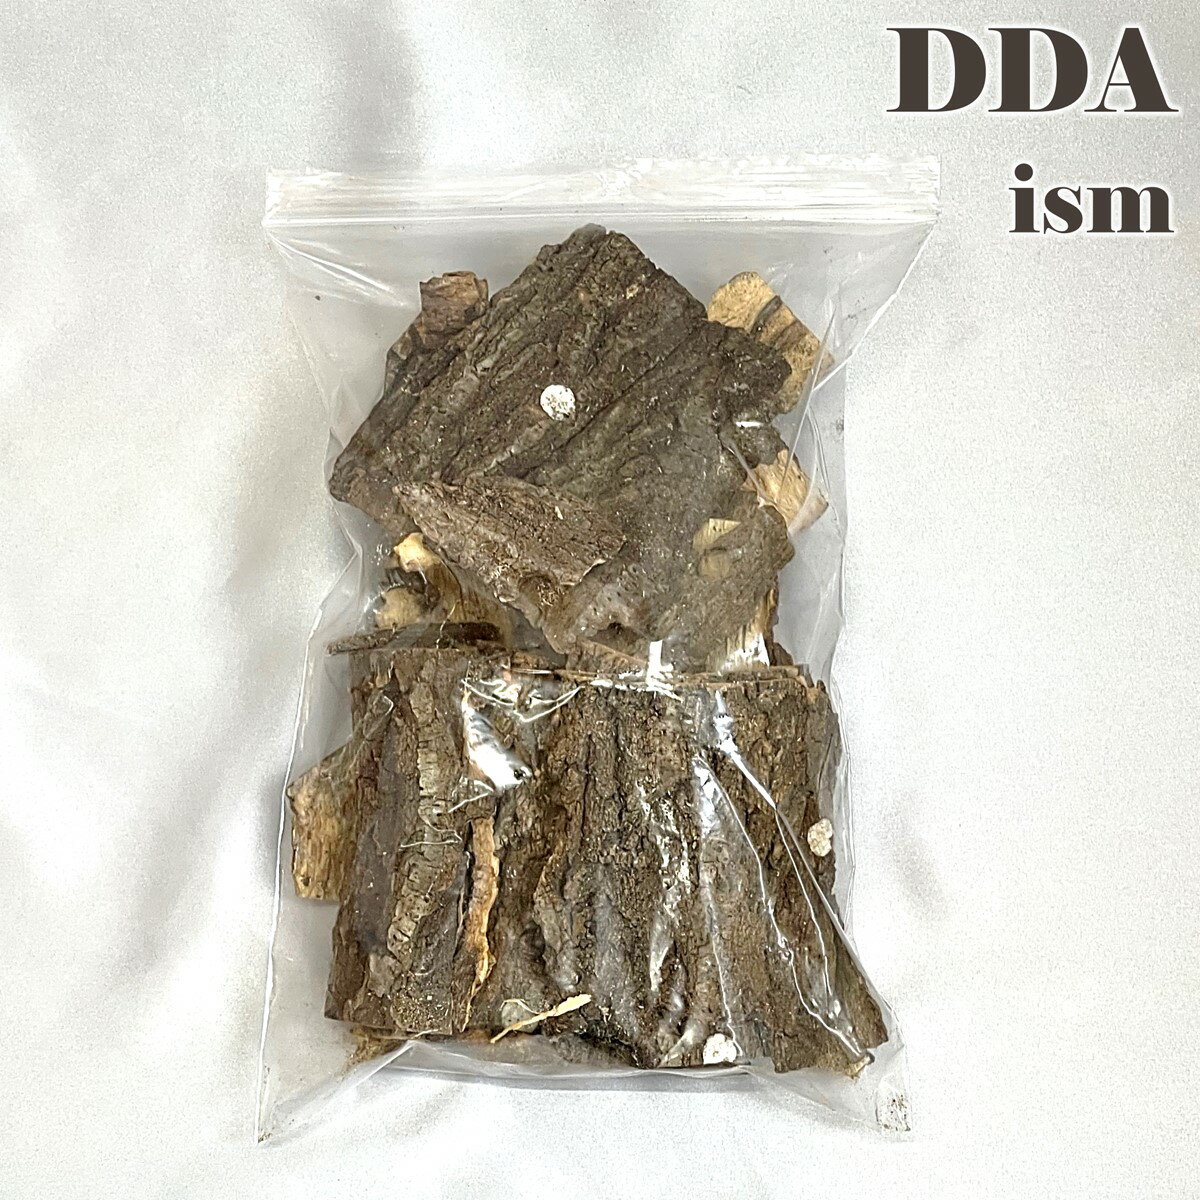 【DDA】成虫用/樹皮マット(3L袋入り) dda クワガタ カブトムシ 昆虫 マット